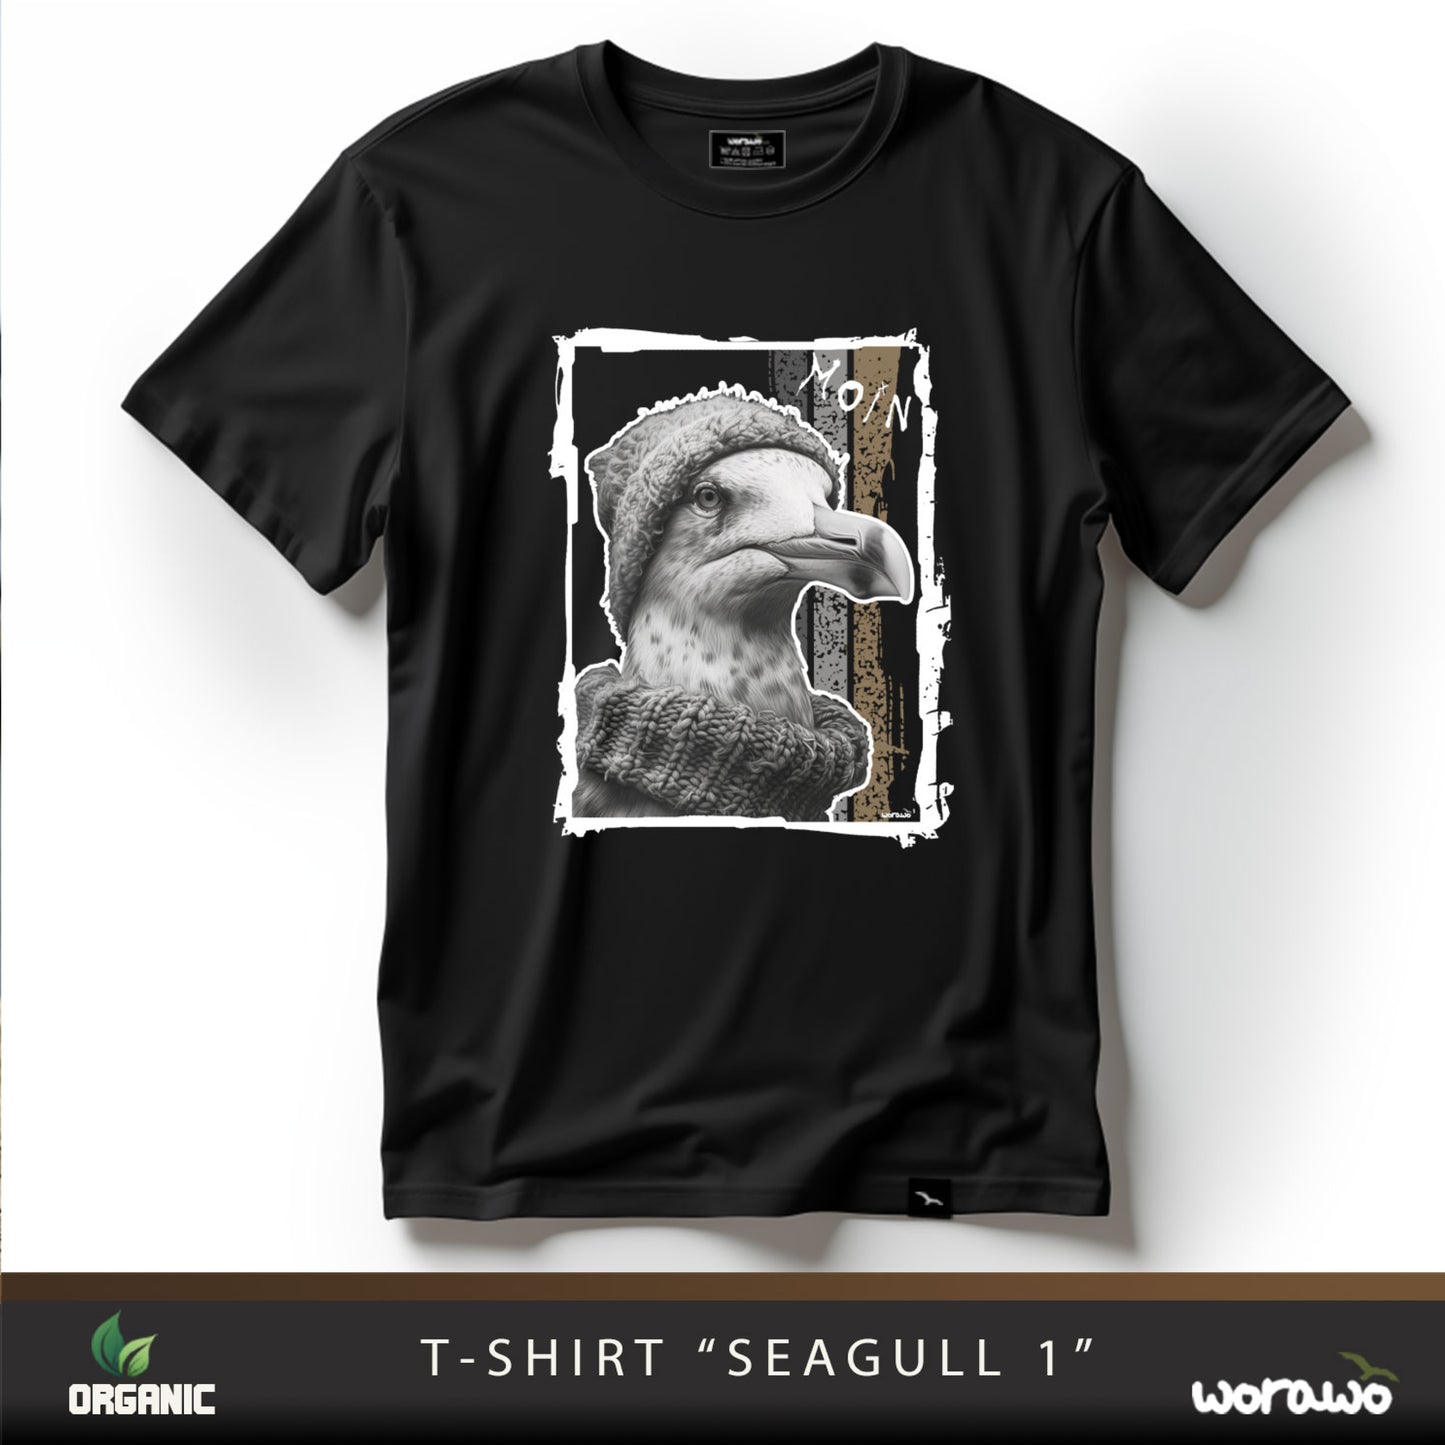 T-Shirt "Seagull 1"